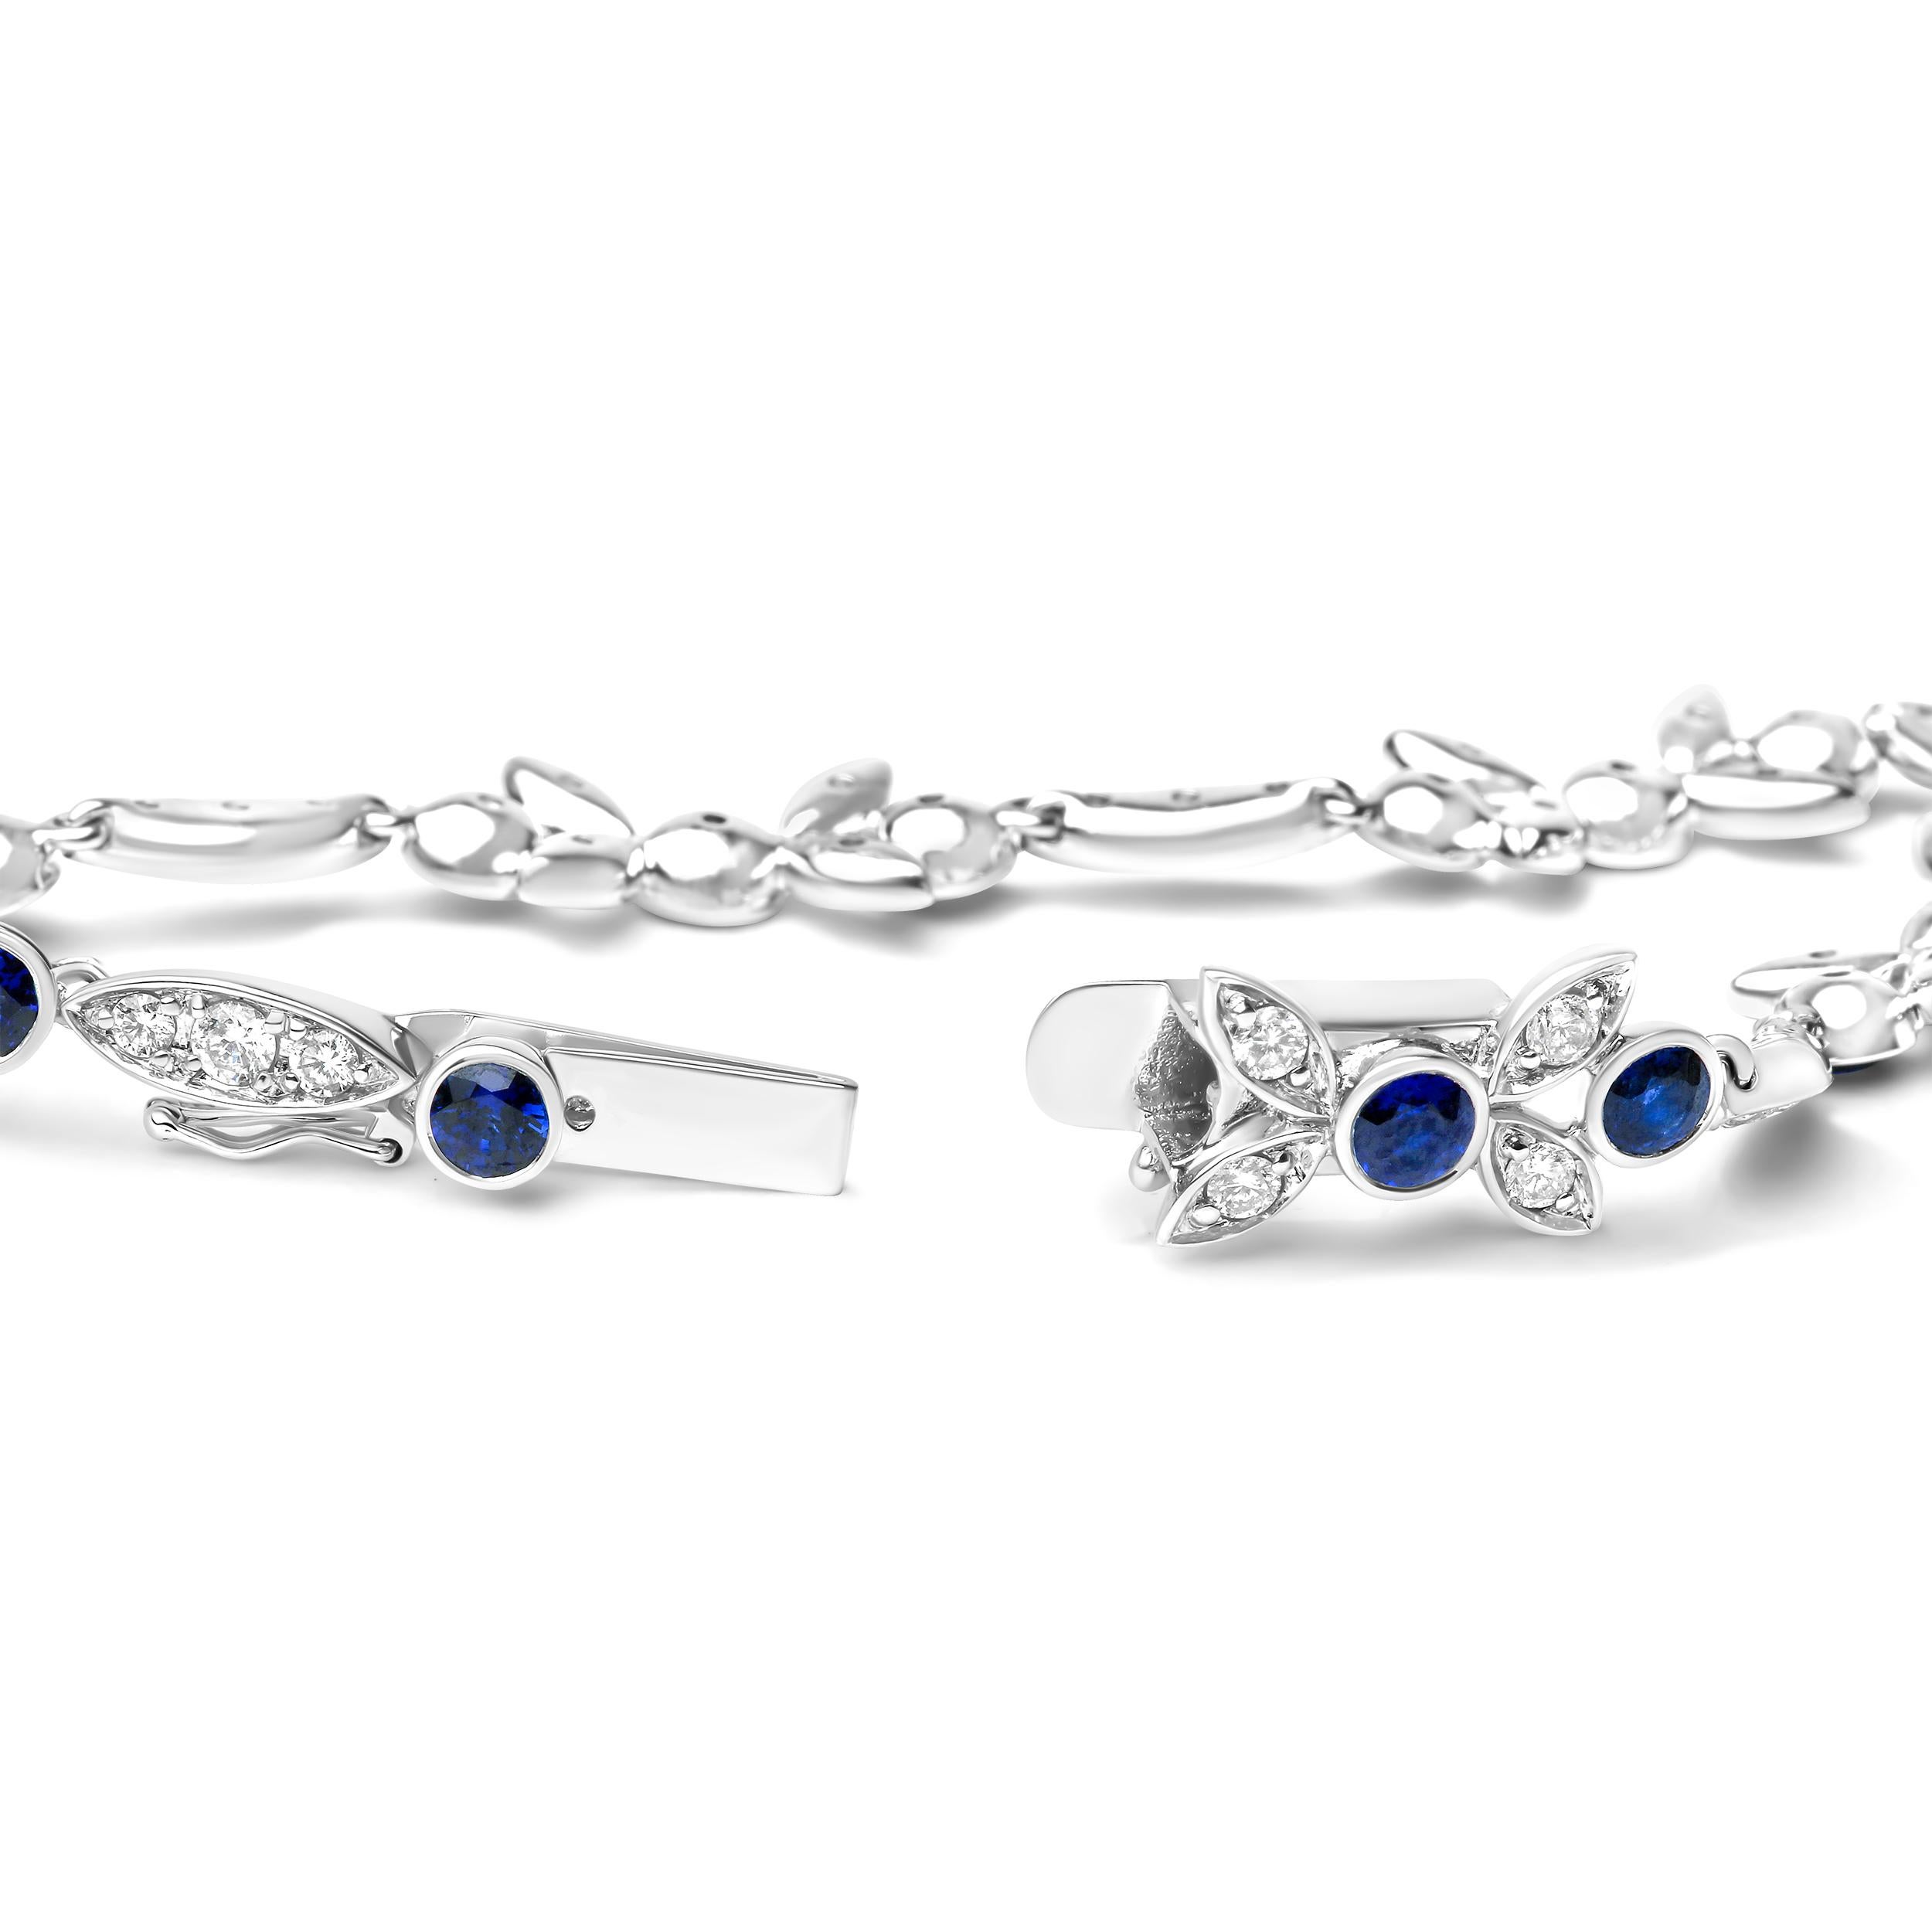 Contemporary 18K White Gold 1 3/4 Carat Diamond & Blue Sapphire Gemstone Floral Link Bracelet For Sale